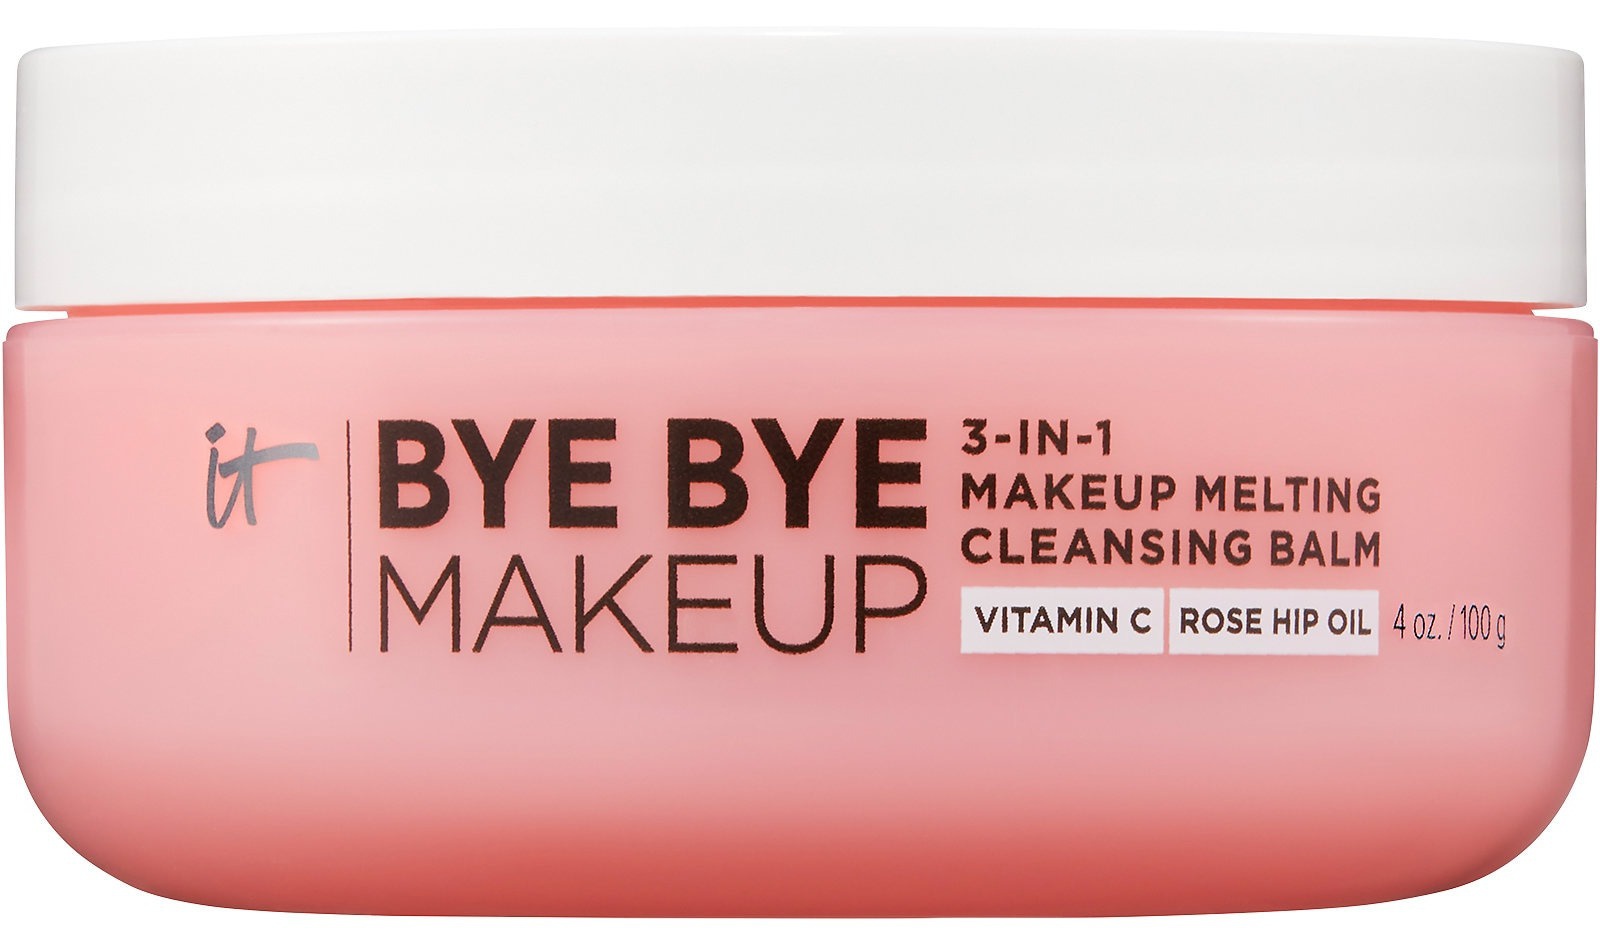 it Cosmetics Bye Bye Makeup 3-in-1 Makeup Melting Cleansing Balm